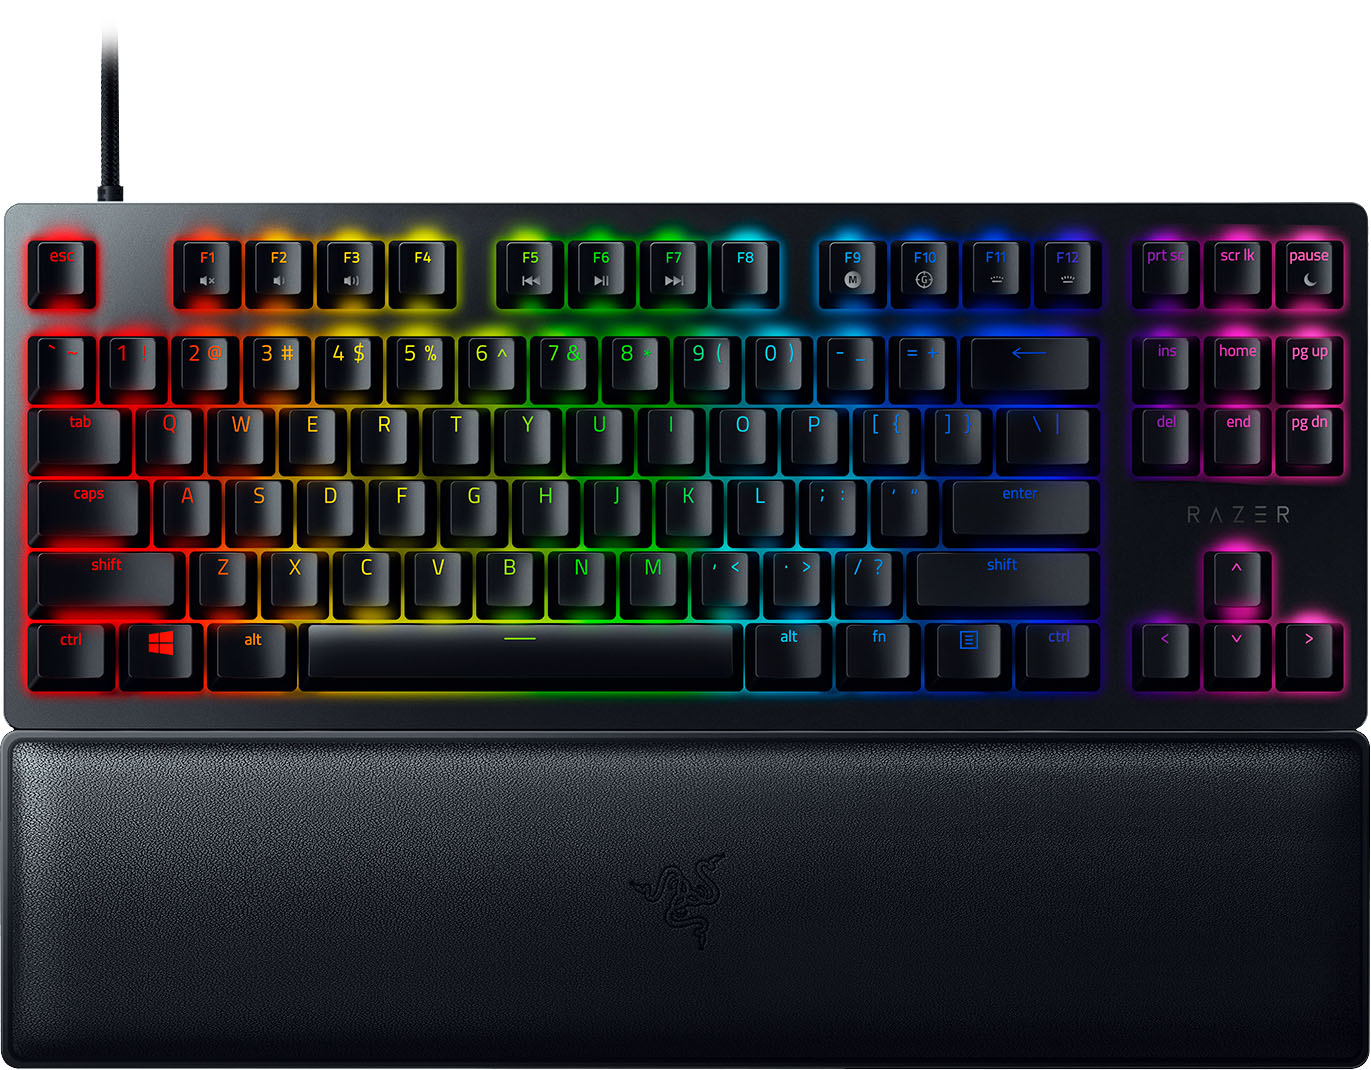 Razer - Huntsman V2 TKL Wired Optical Red Linear Switch Gaming Keyboard with Chroma RGB Backlighting - Black